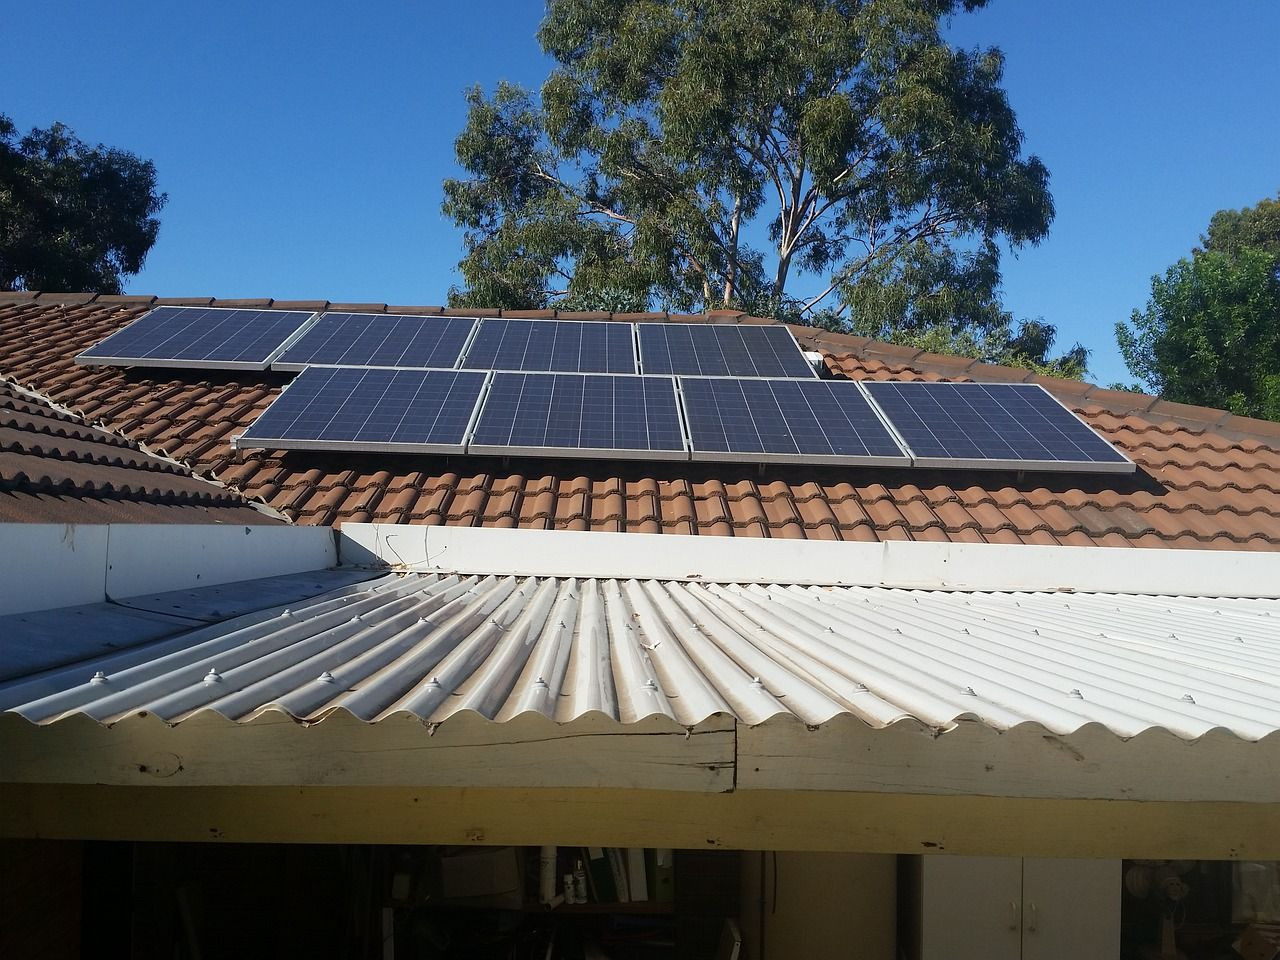 solar-panels-gd4d508829_1280